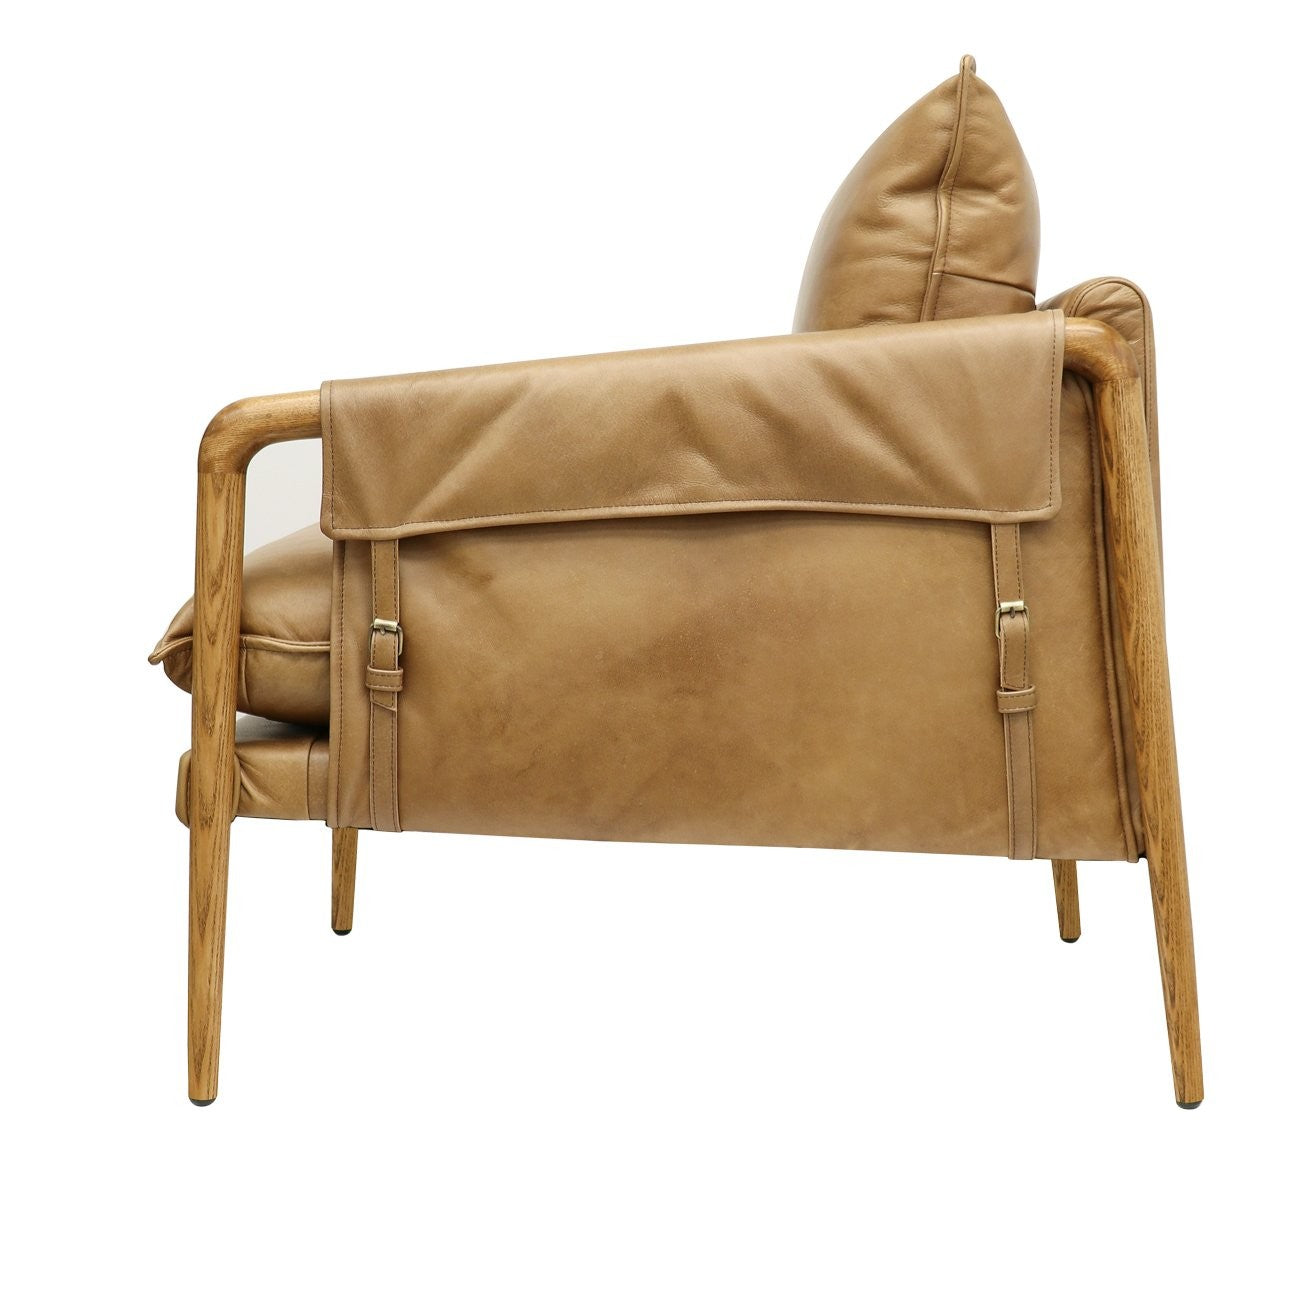 Conan Leather Armchair - Tan